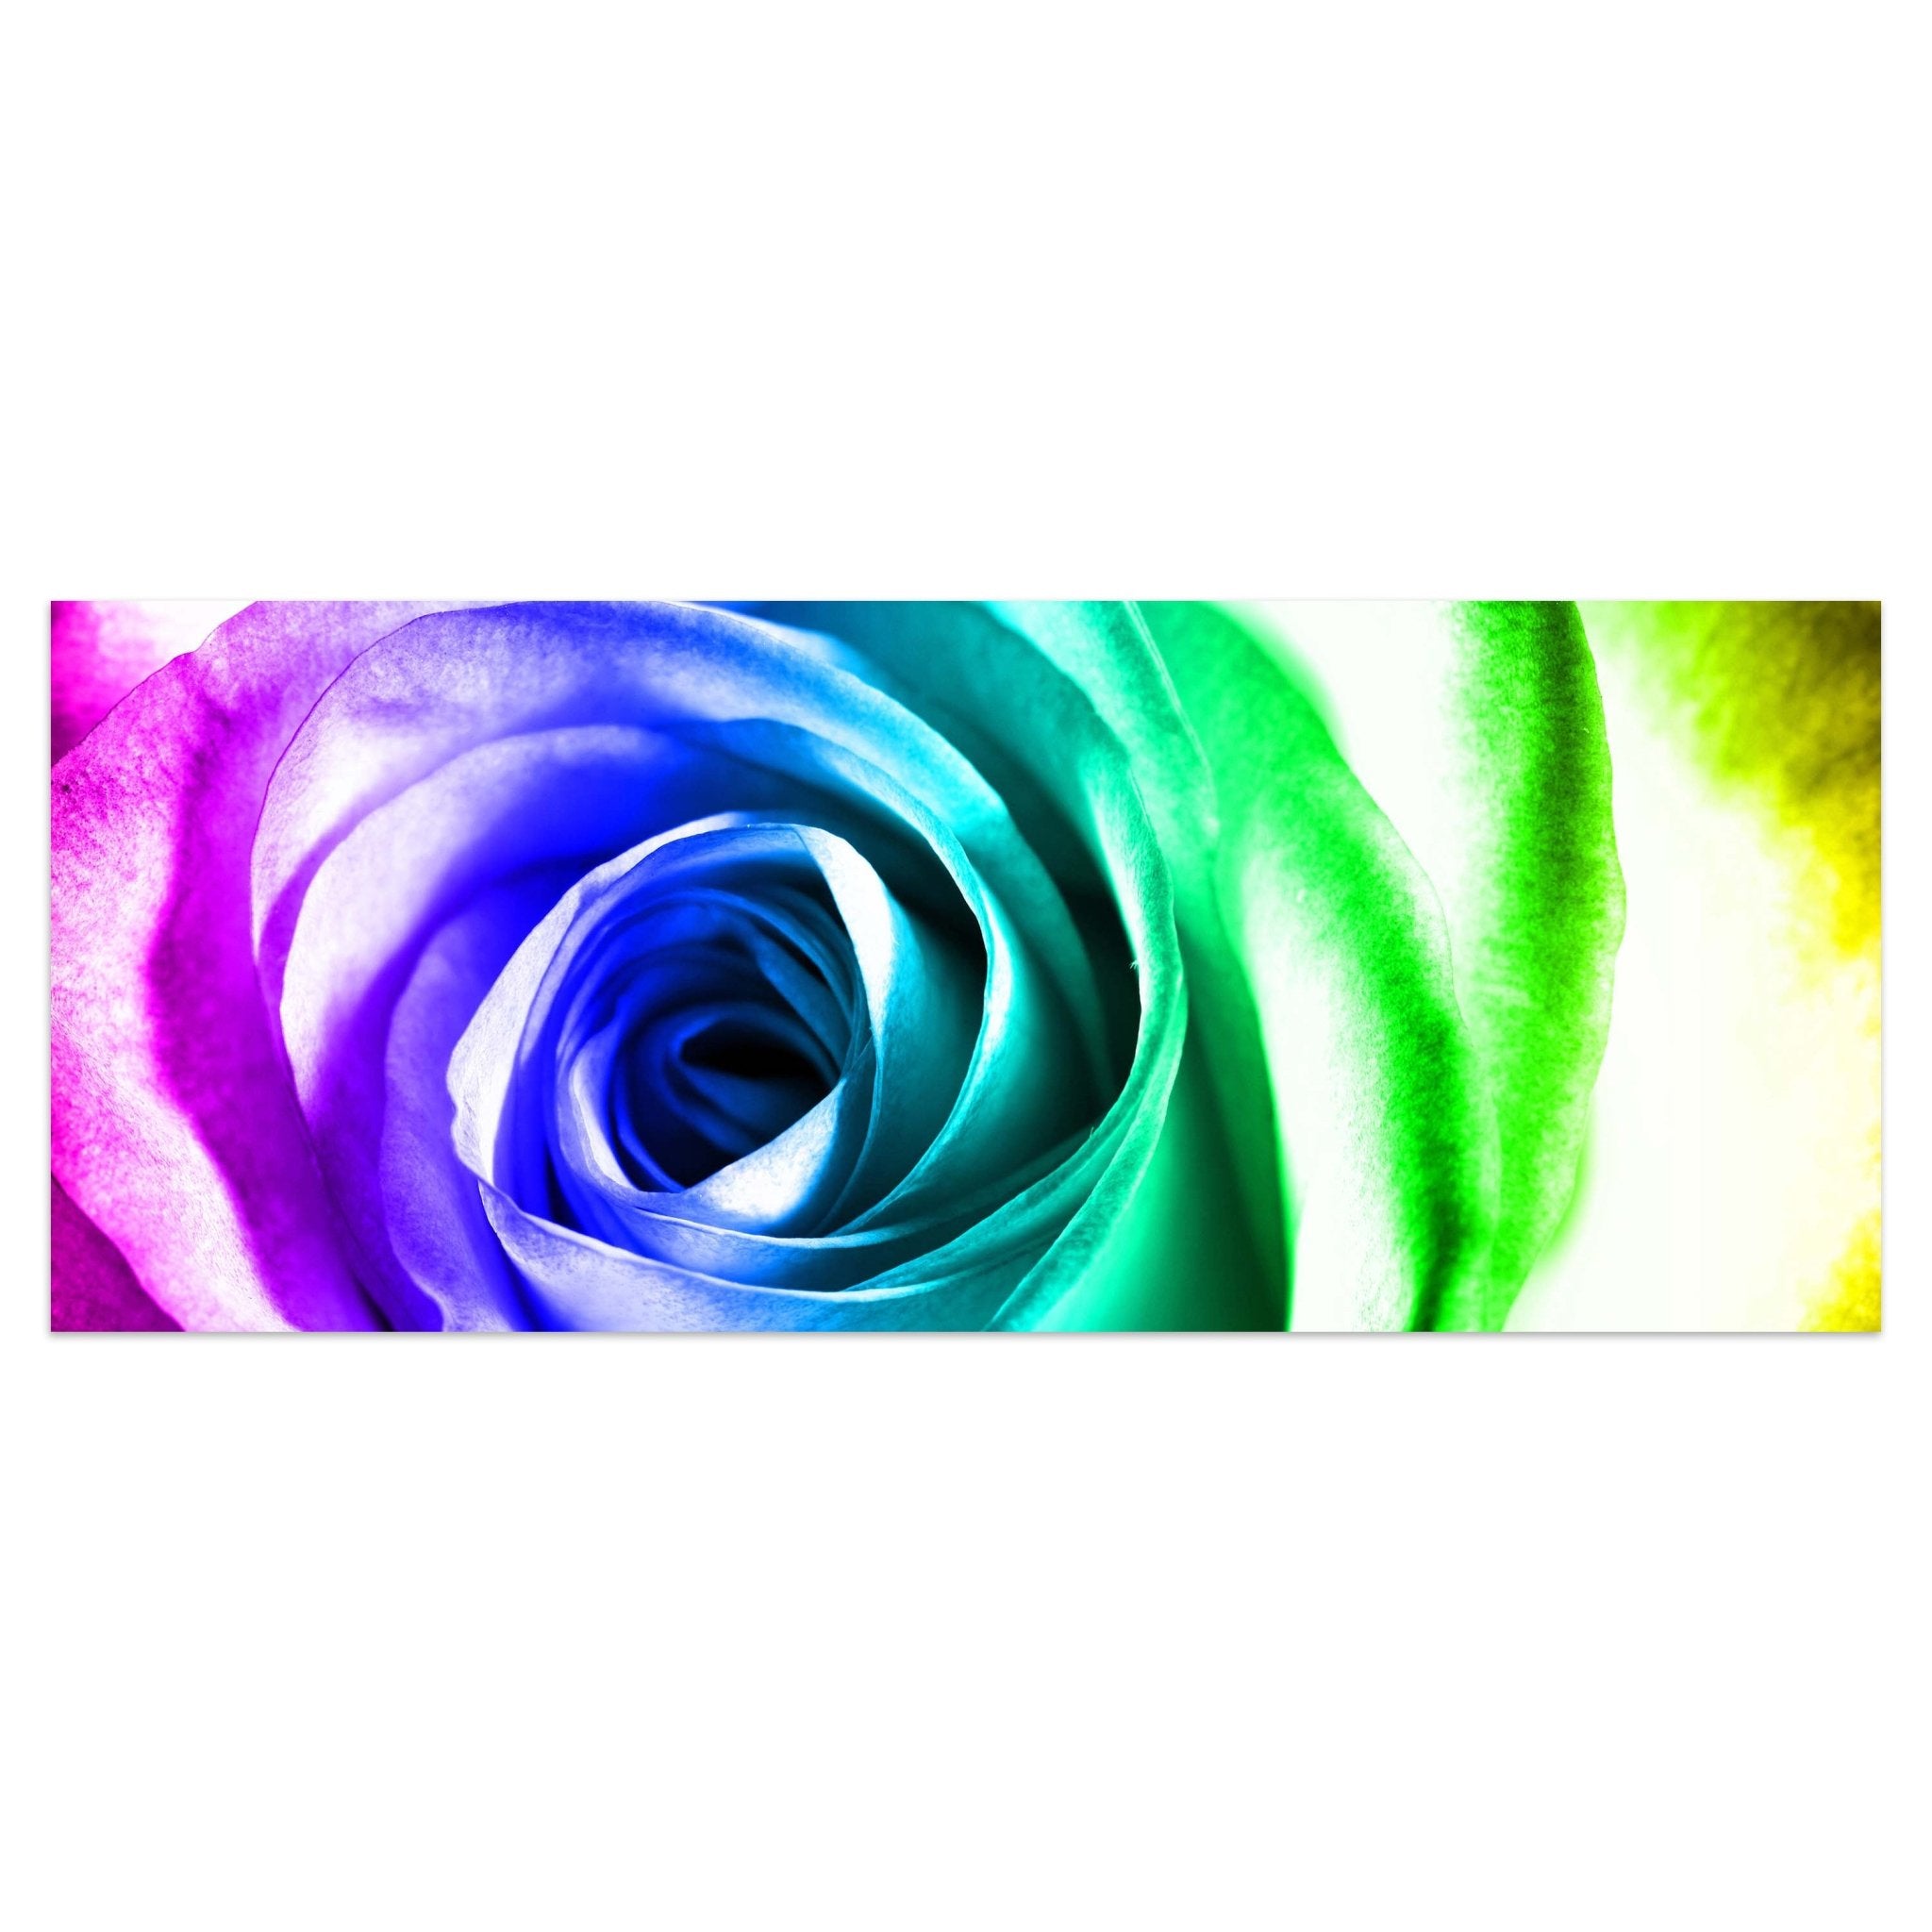 Leinwandbild Regenbogenrose Blüte M0230 kaufen - Bild 1